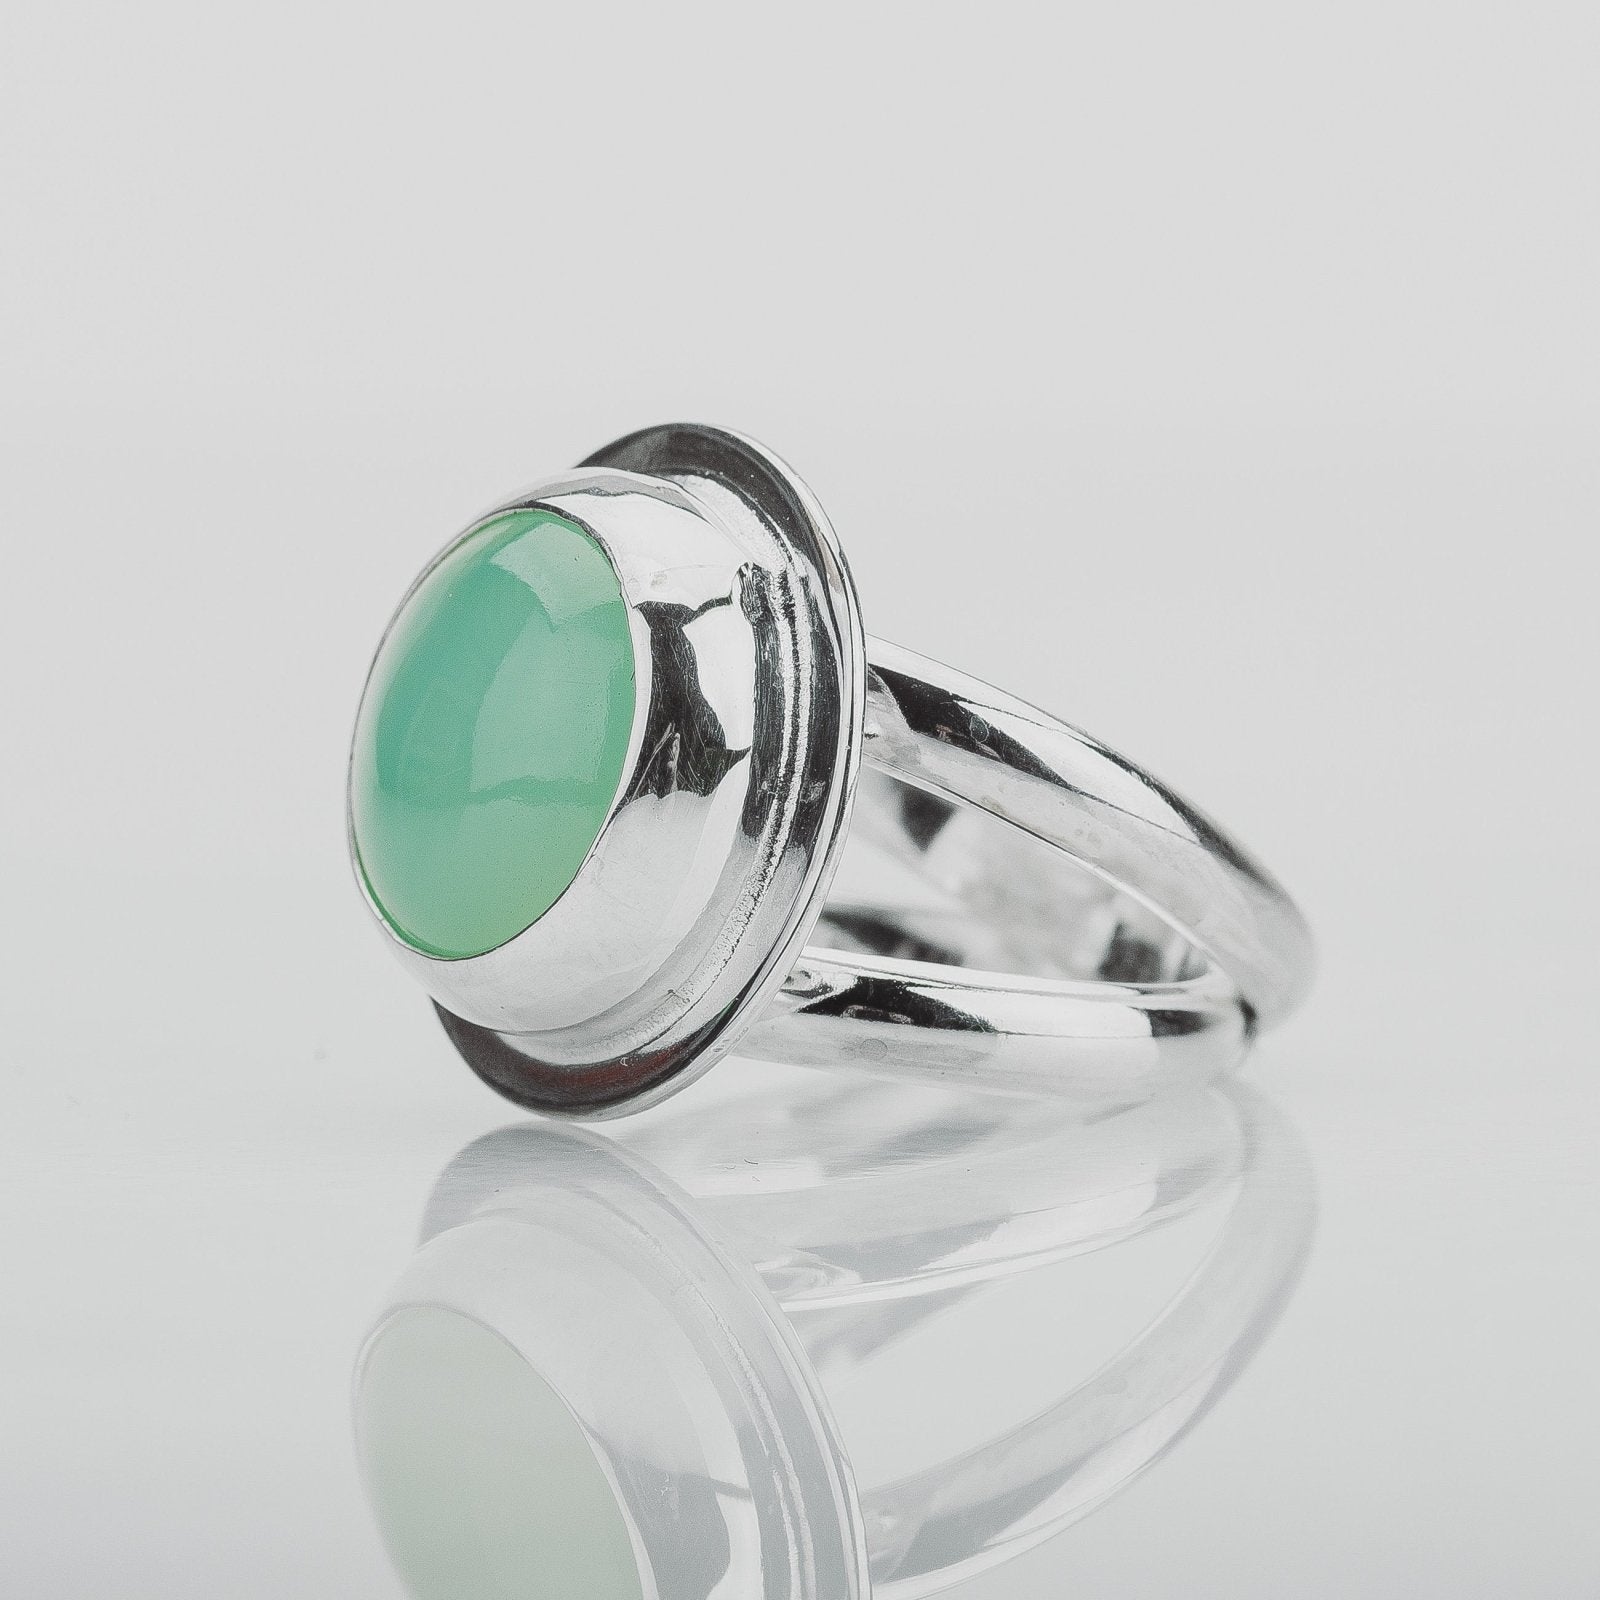 Size 6.5 Aqua Blue Chalcedony Gemstone Ring - Melanie Golden Jewelry - gemstone rings, rings